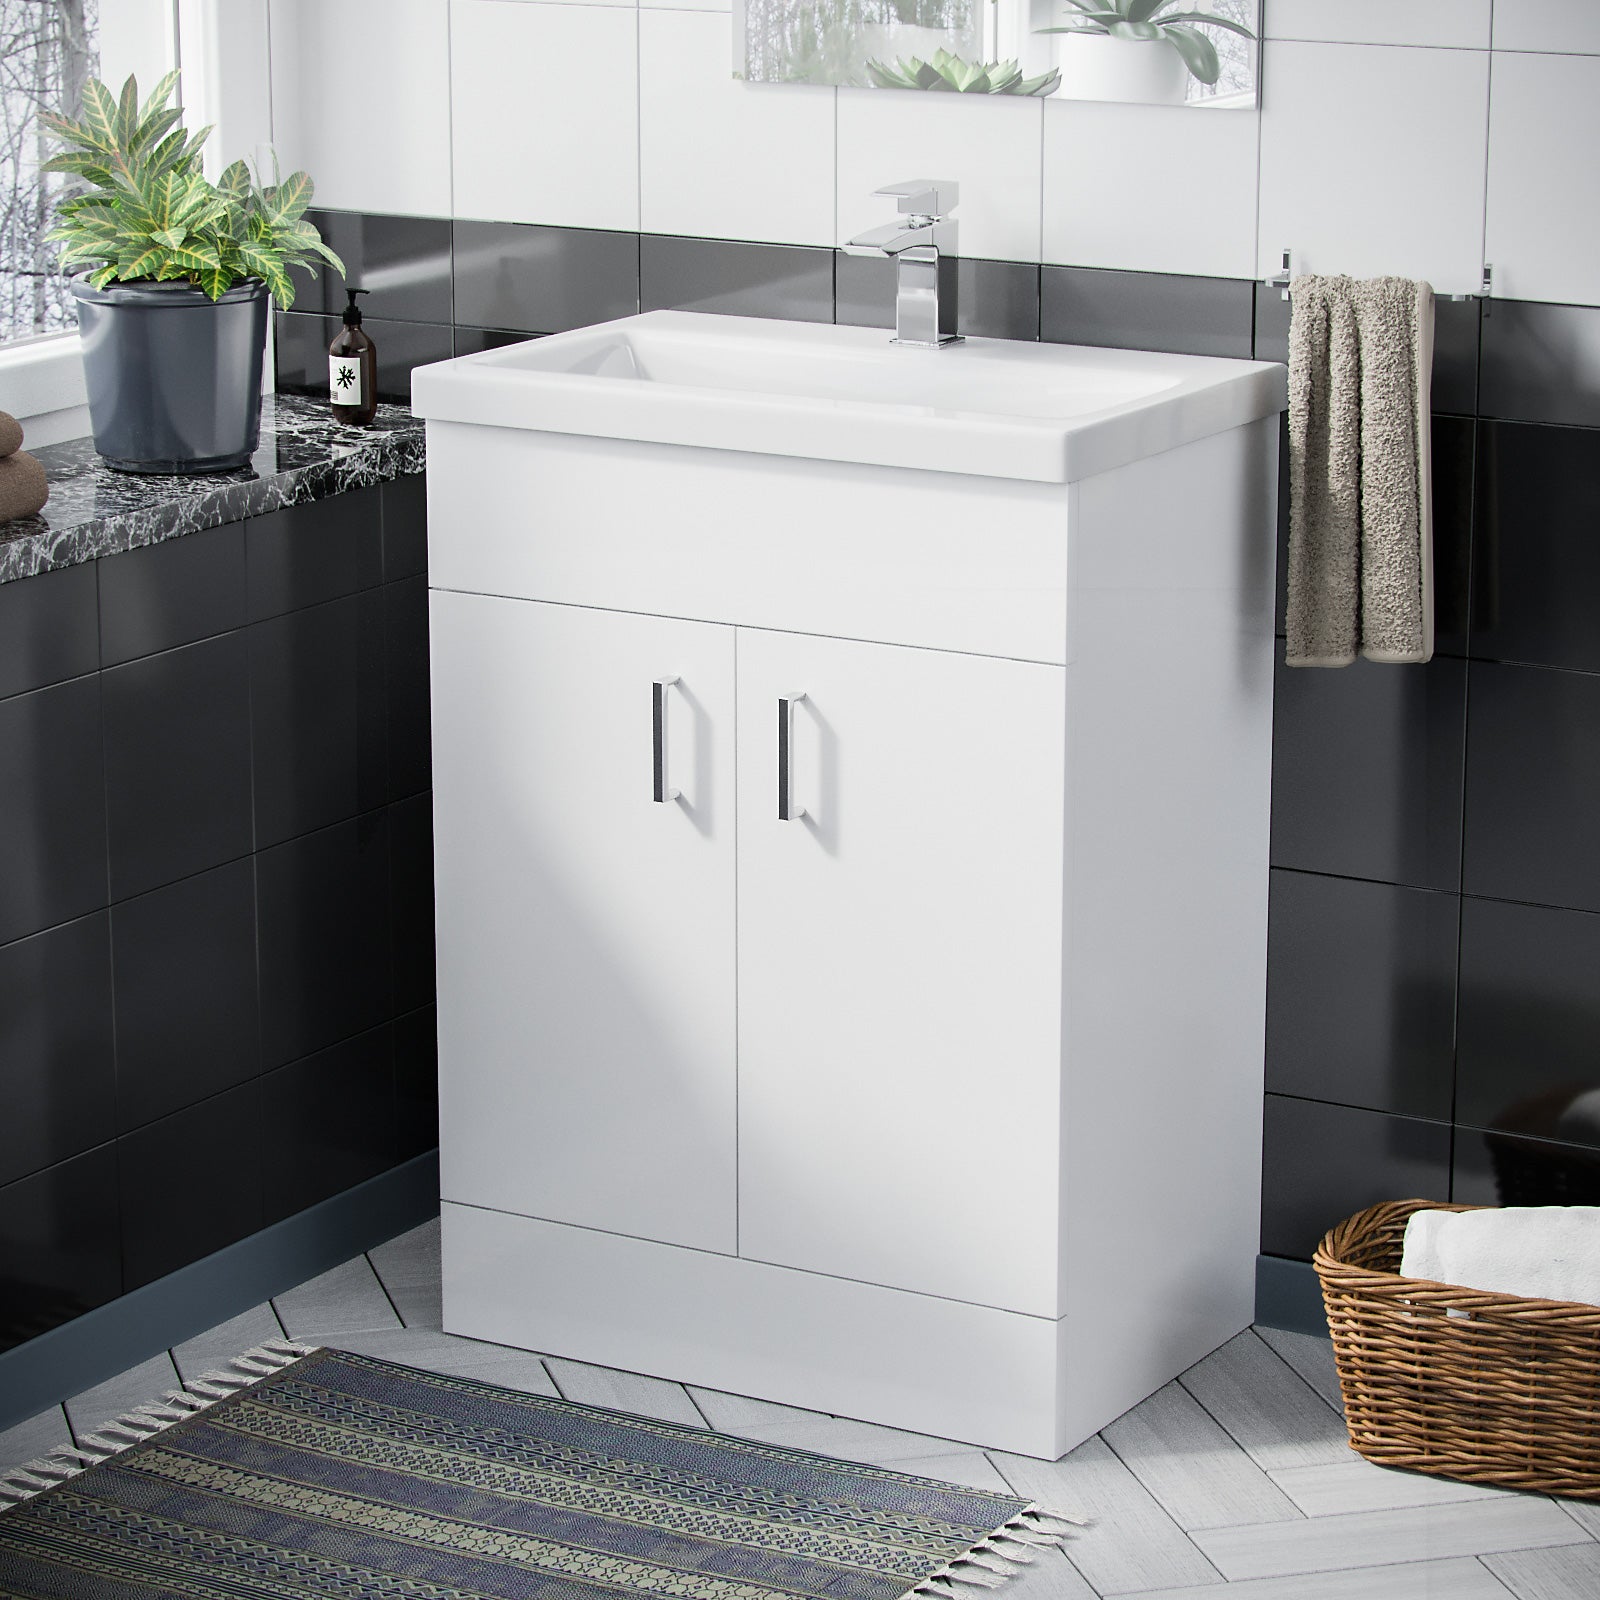 White Hung Bathroom Vanity Unit, modern design with long chrome handle. 1 drawer Unit.